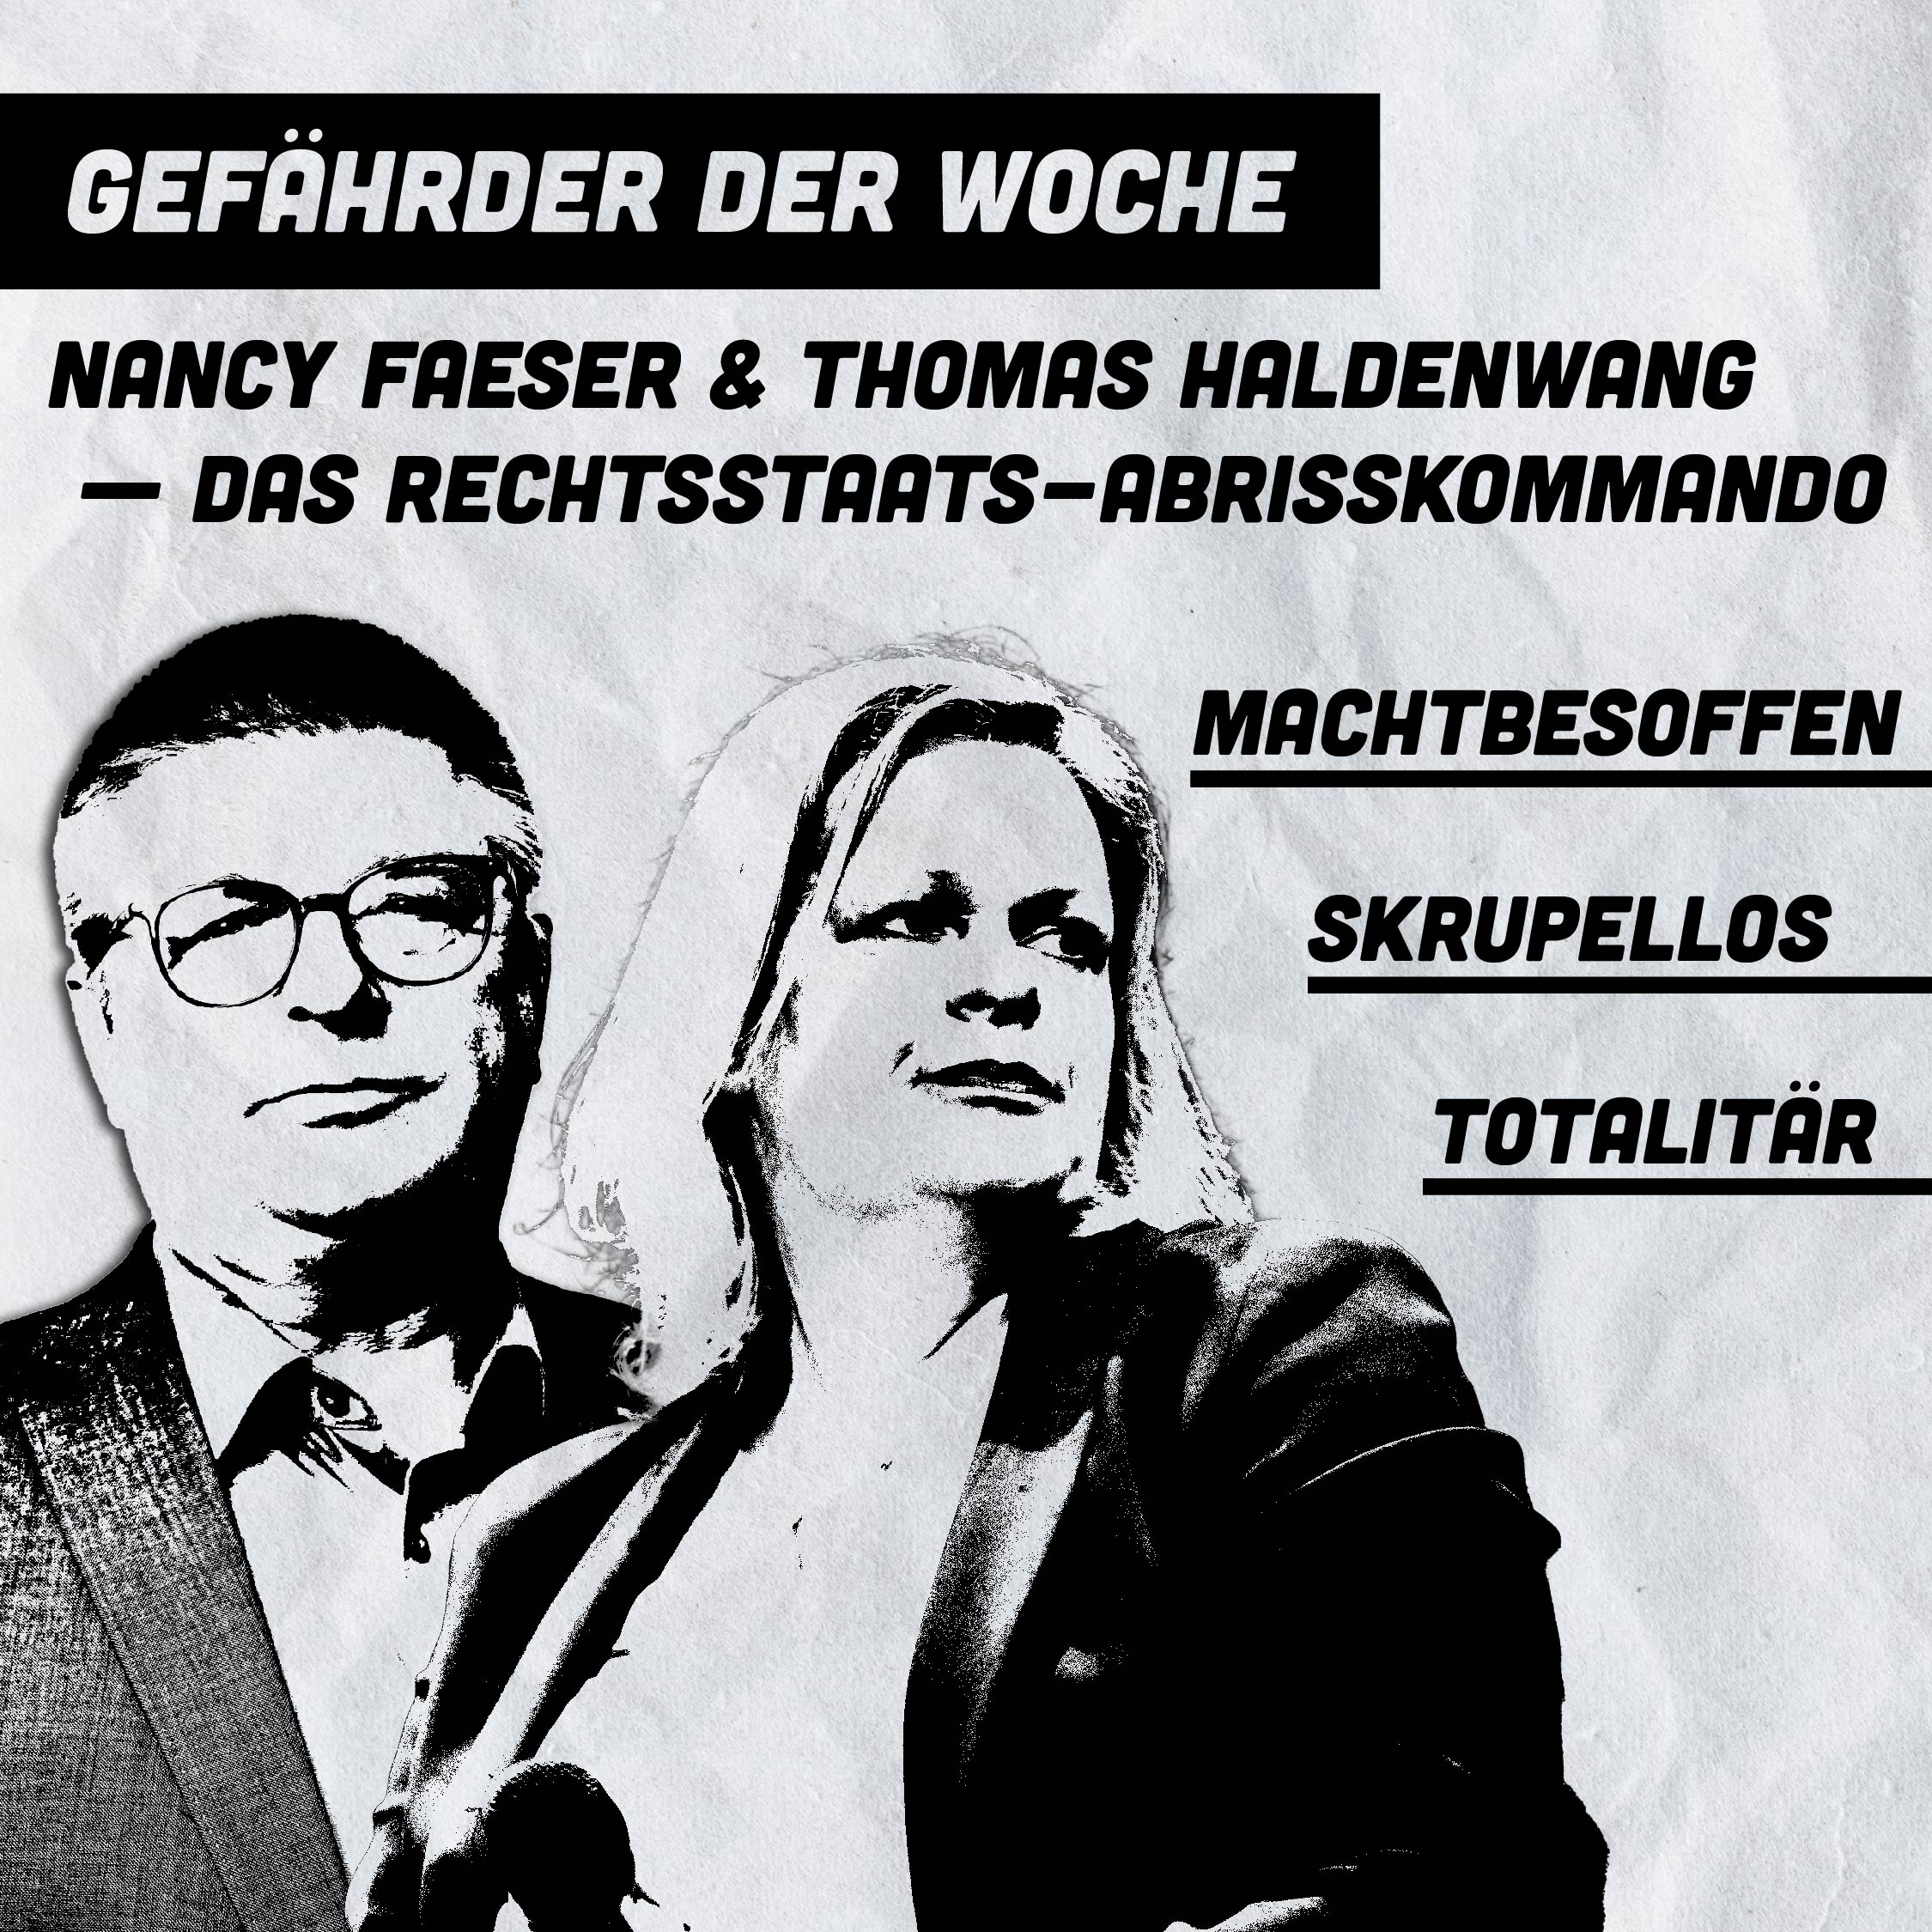 <div>Gefährder des Monats: Faeser & Haldenwang, das Rechtsstaats-Abrisskommando</div>